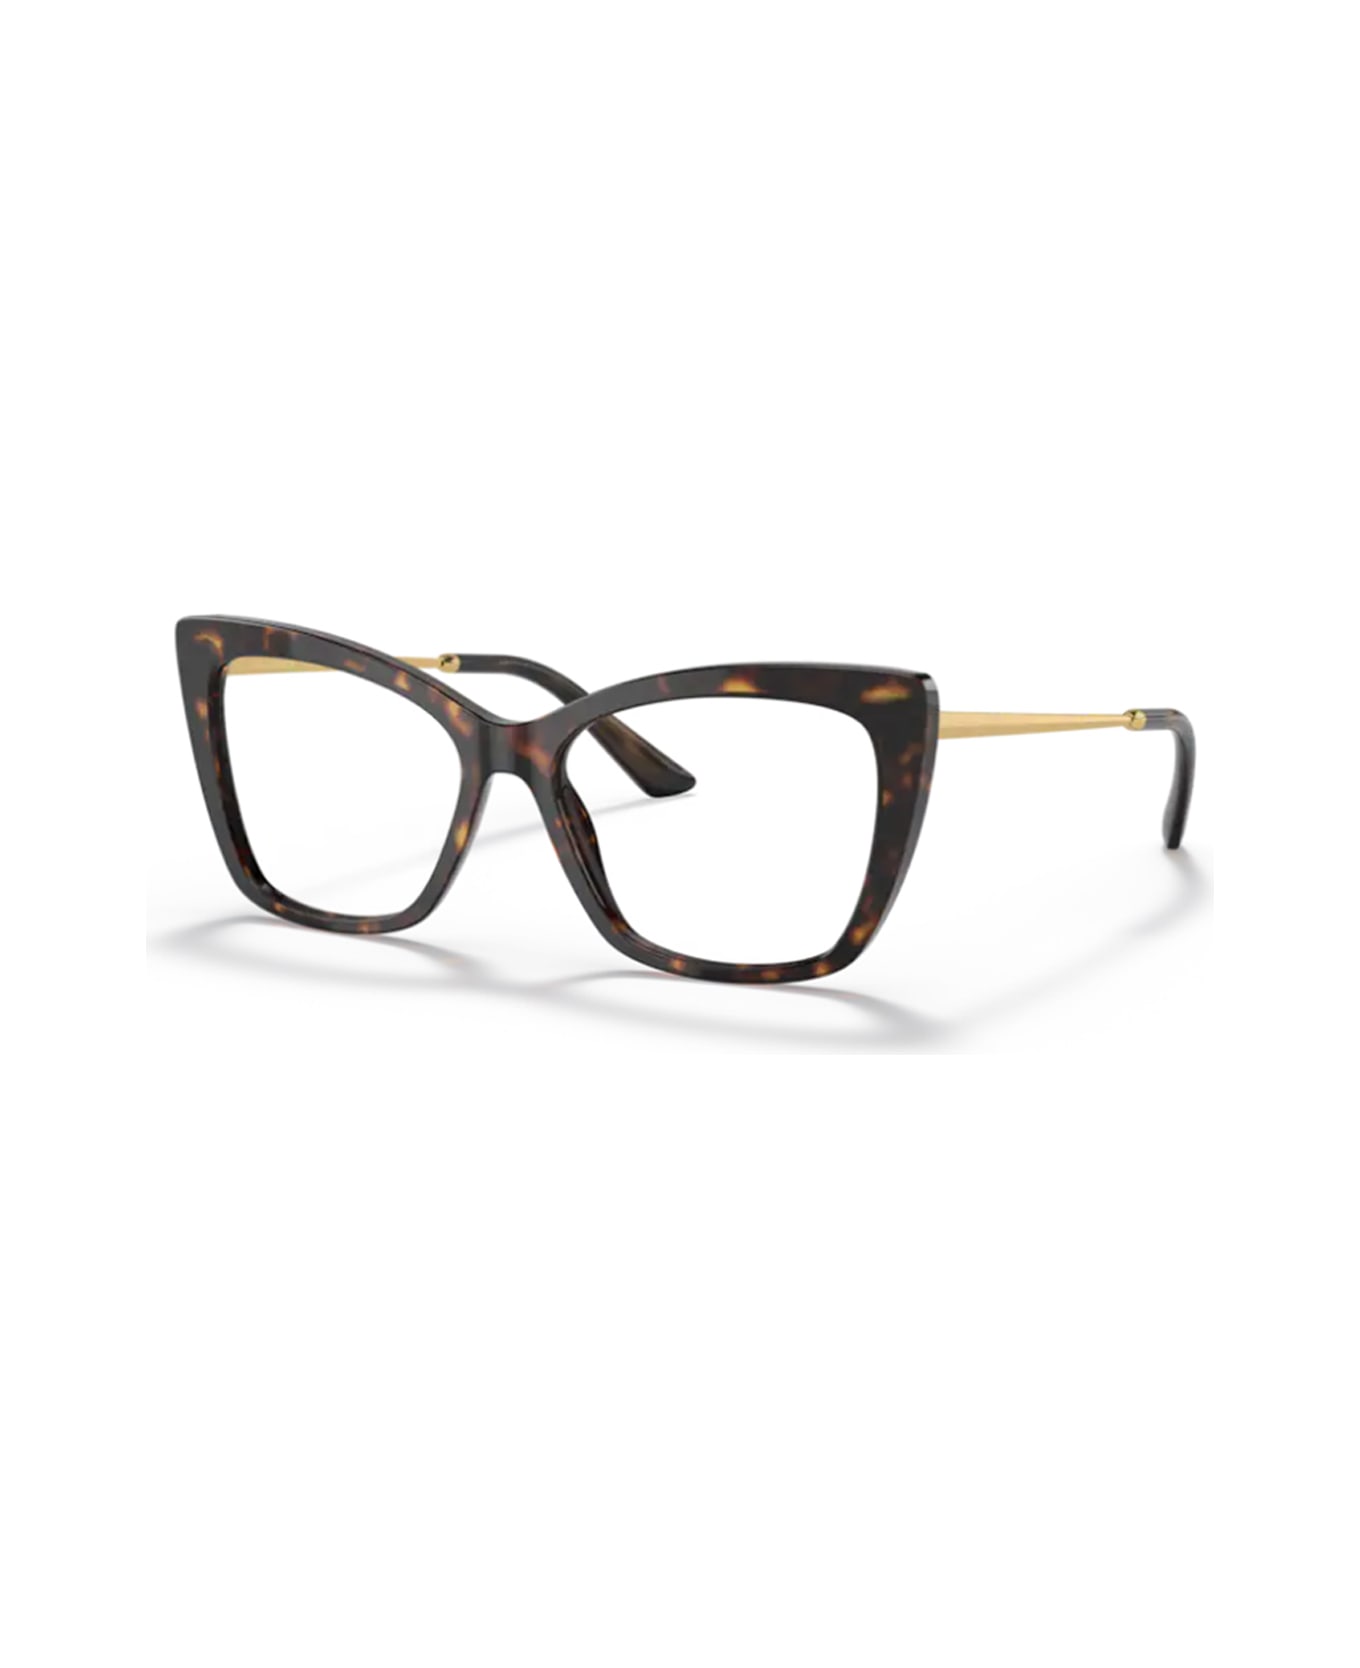 Dolce & Gabbana Eyewear Dg3348 Glasses - Marrone アイウェア